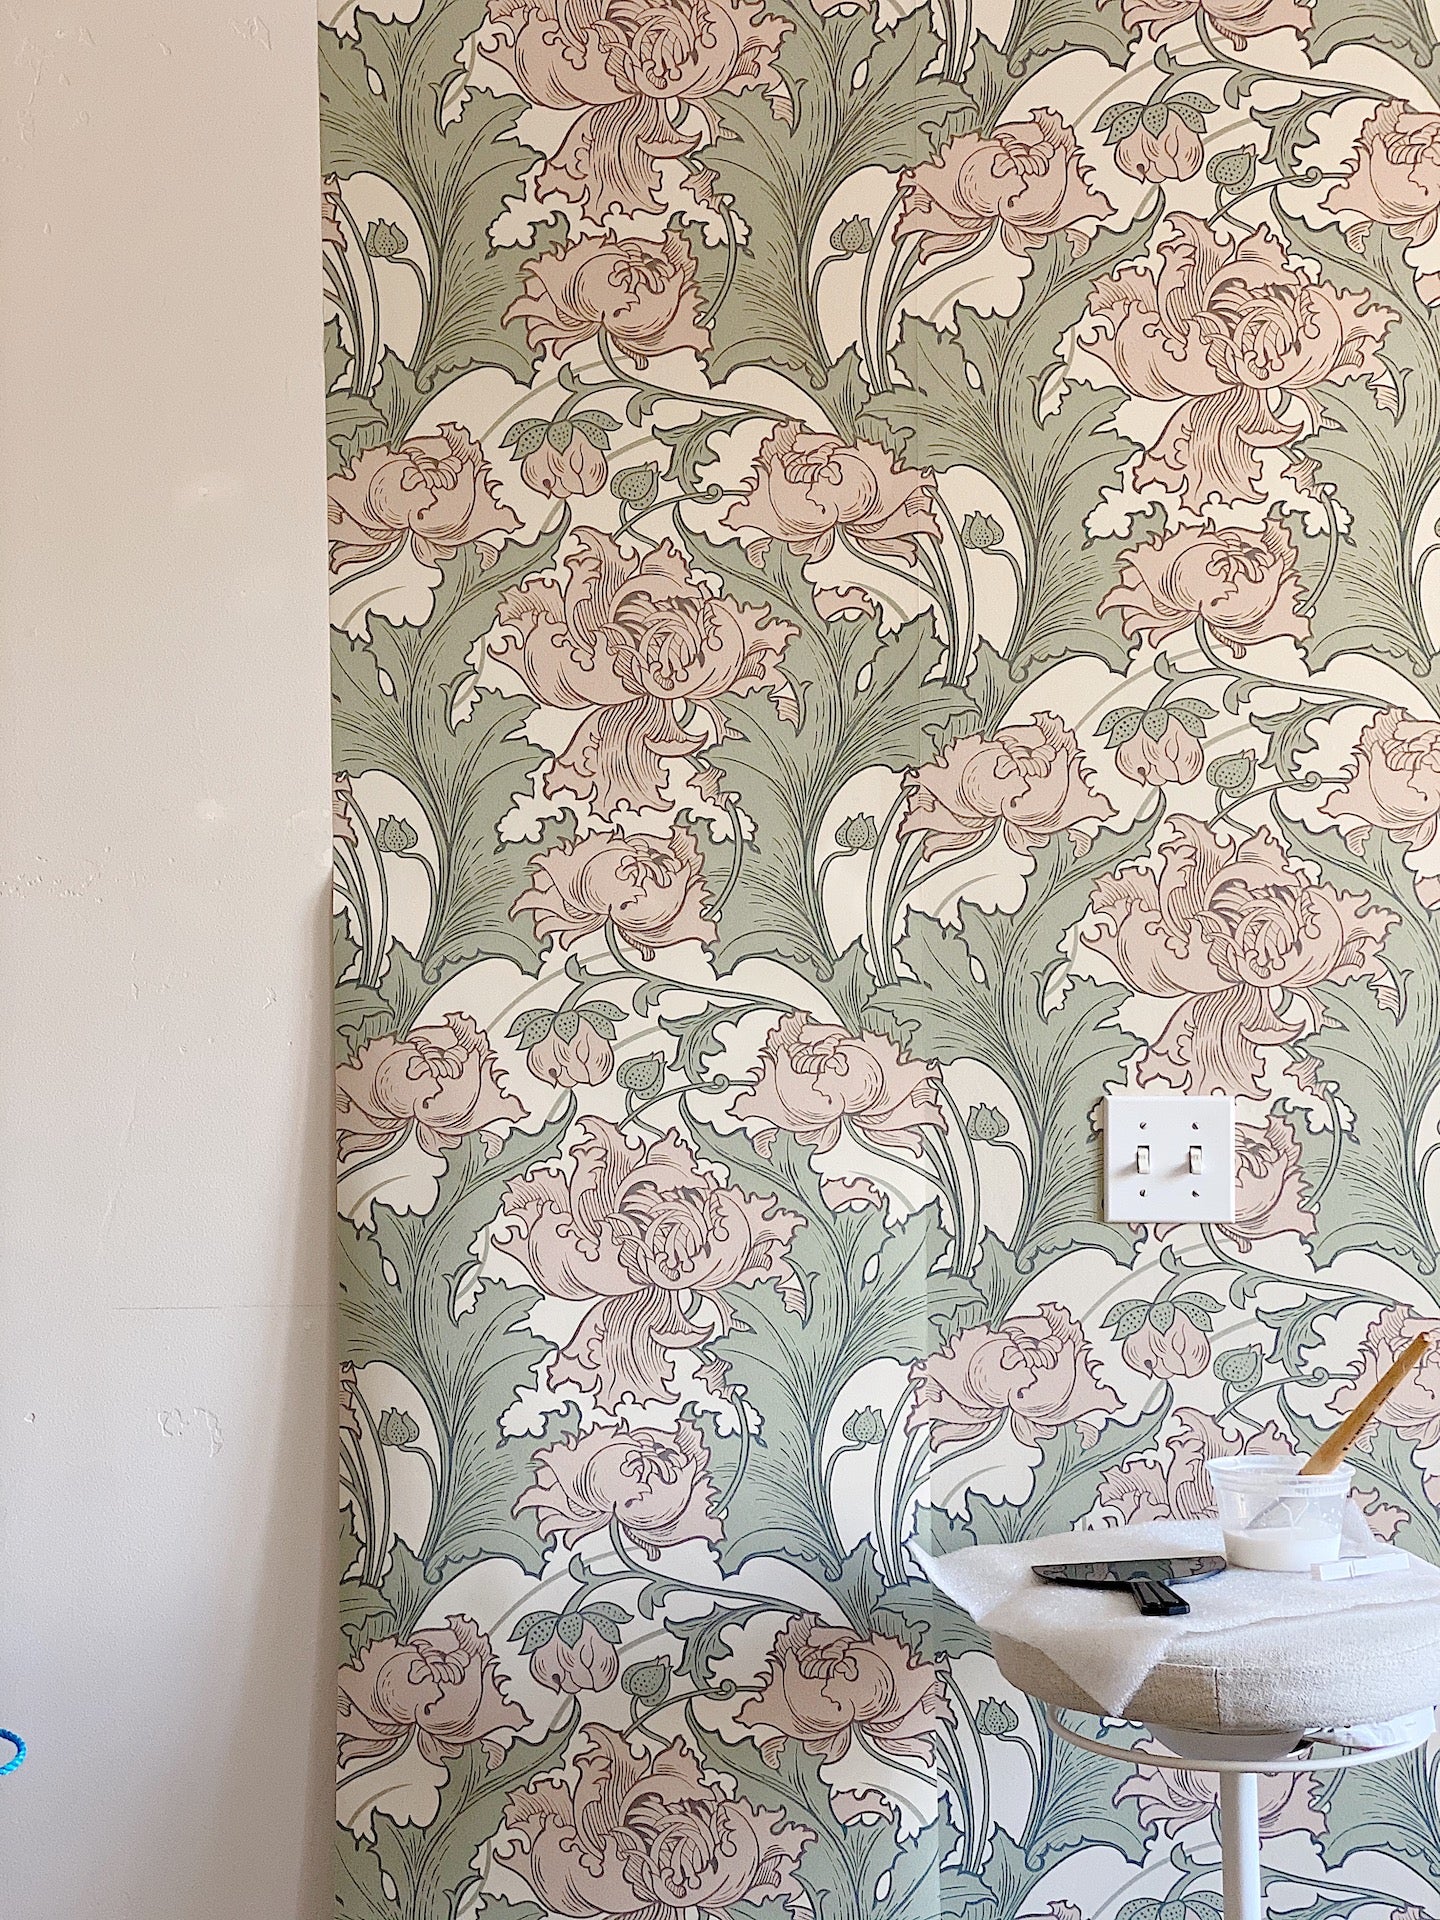 floral wallpaper installation process 